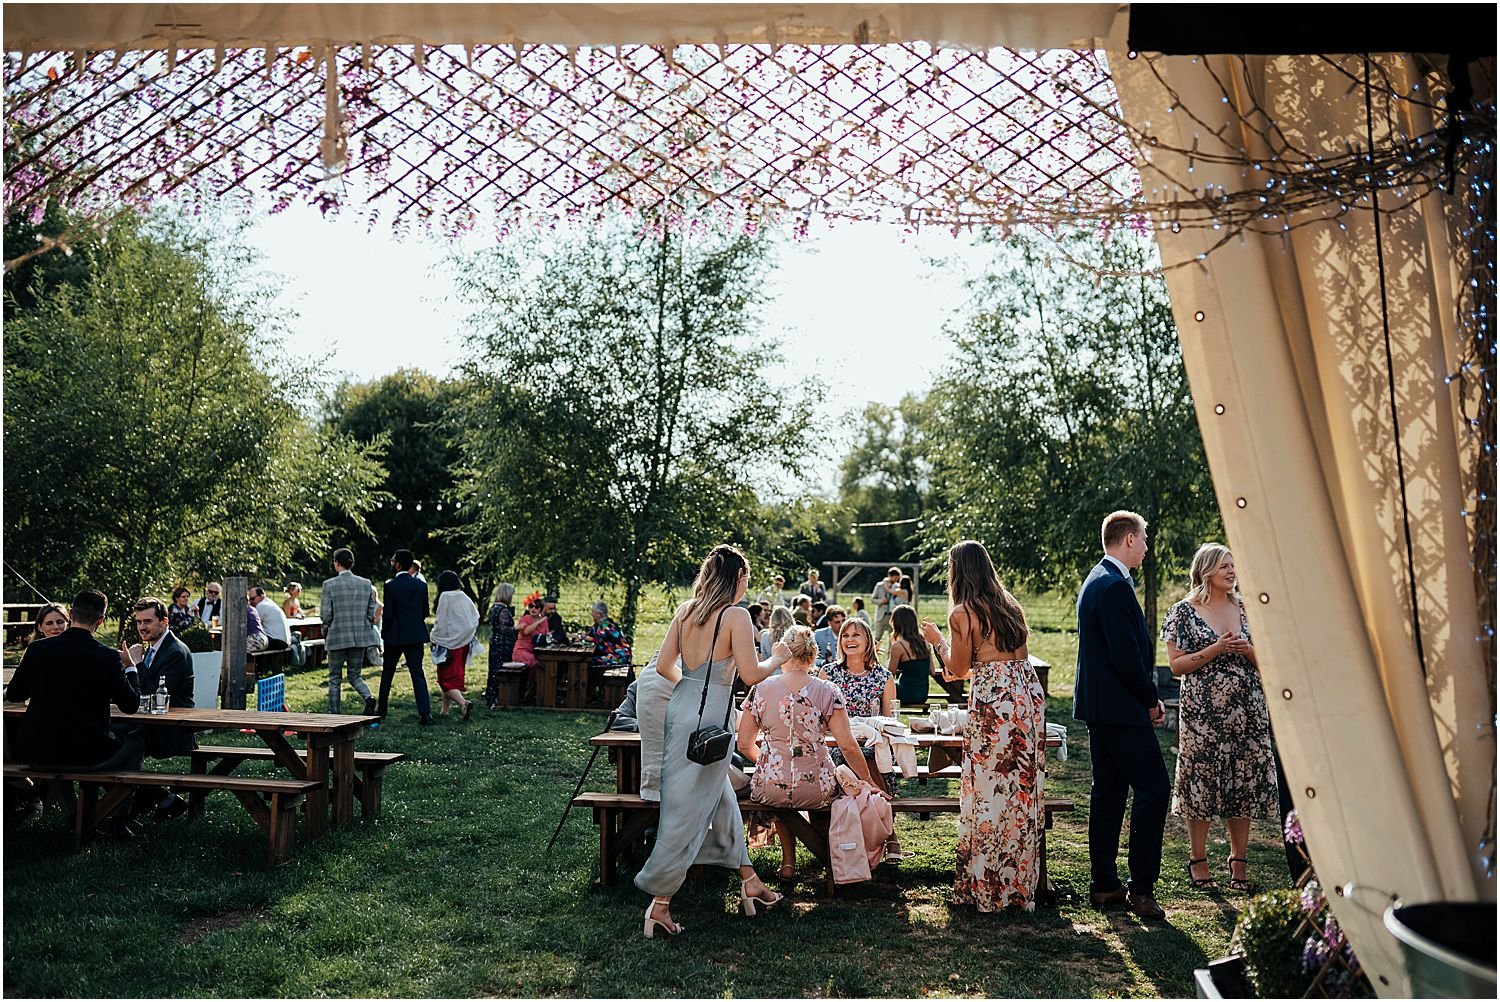 Festival style wedding at Isis Farmhouse Iffley